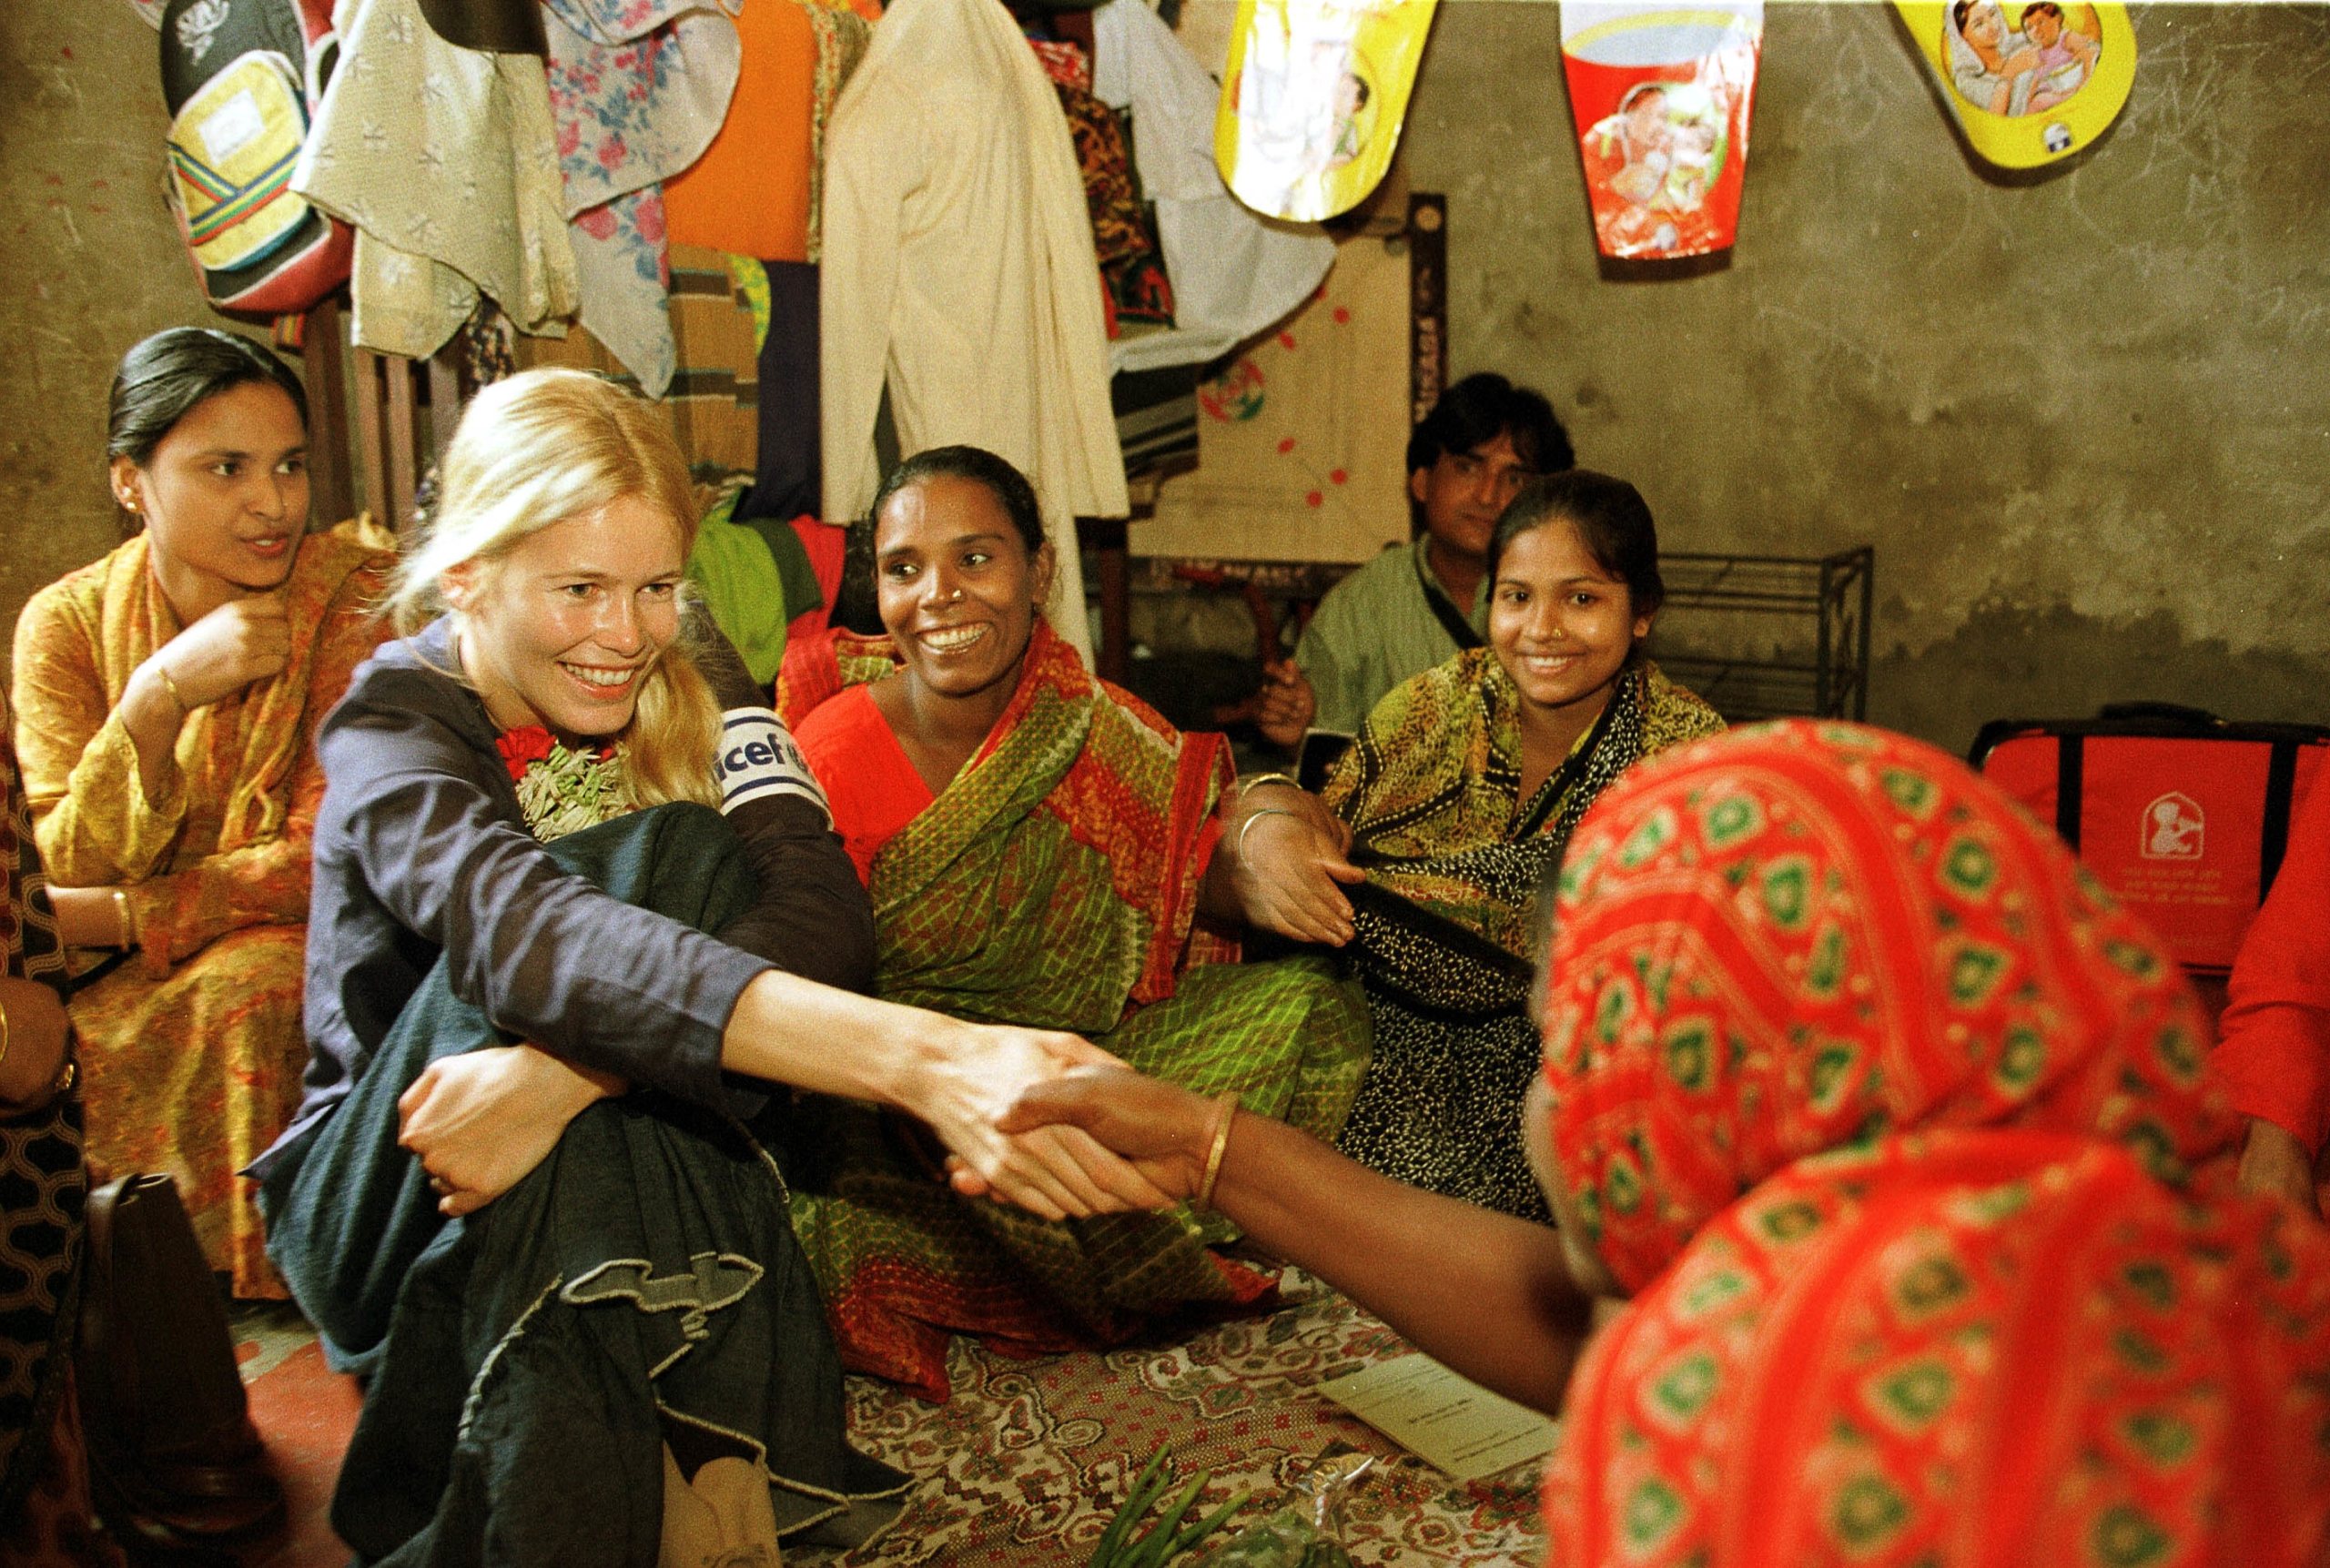 Claudia Schiffer in Bangladesh for UNICEF